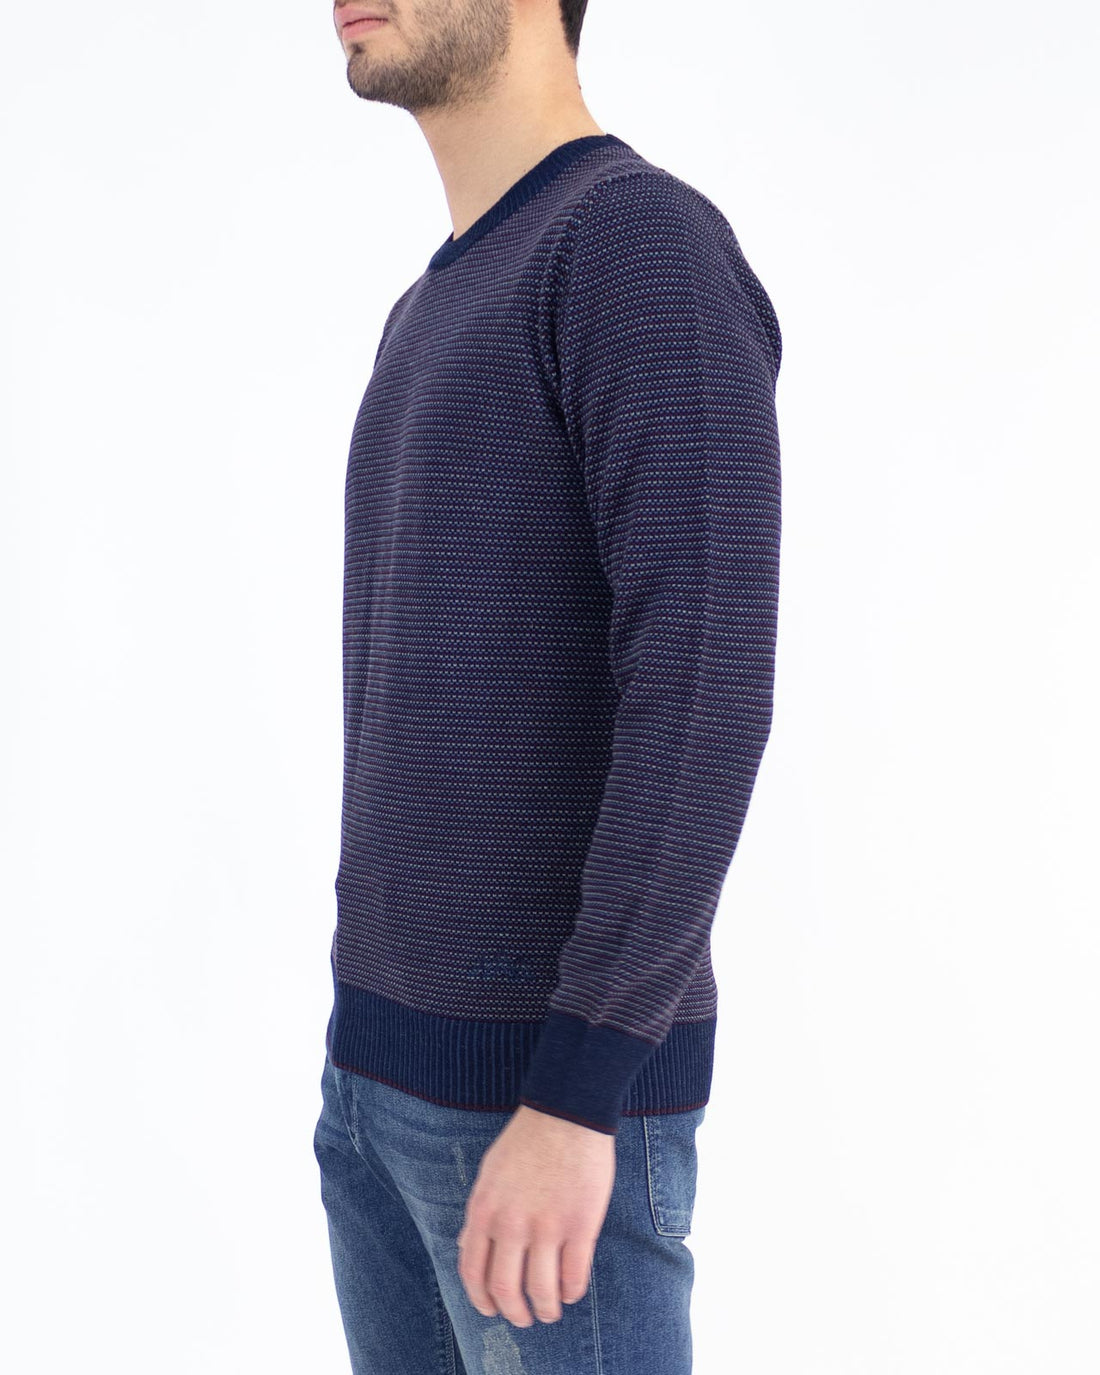 Three-thread crew neck sweater